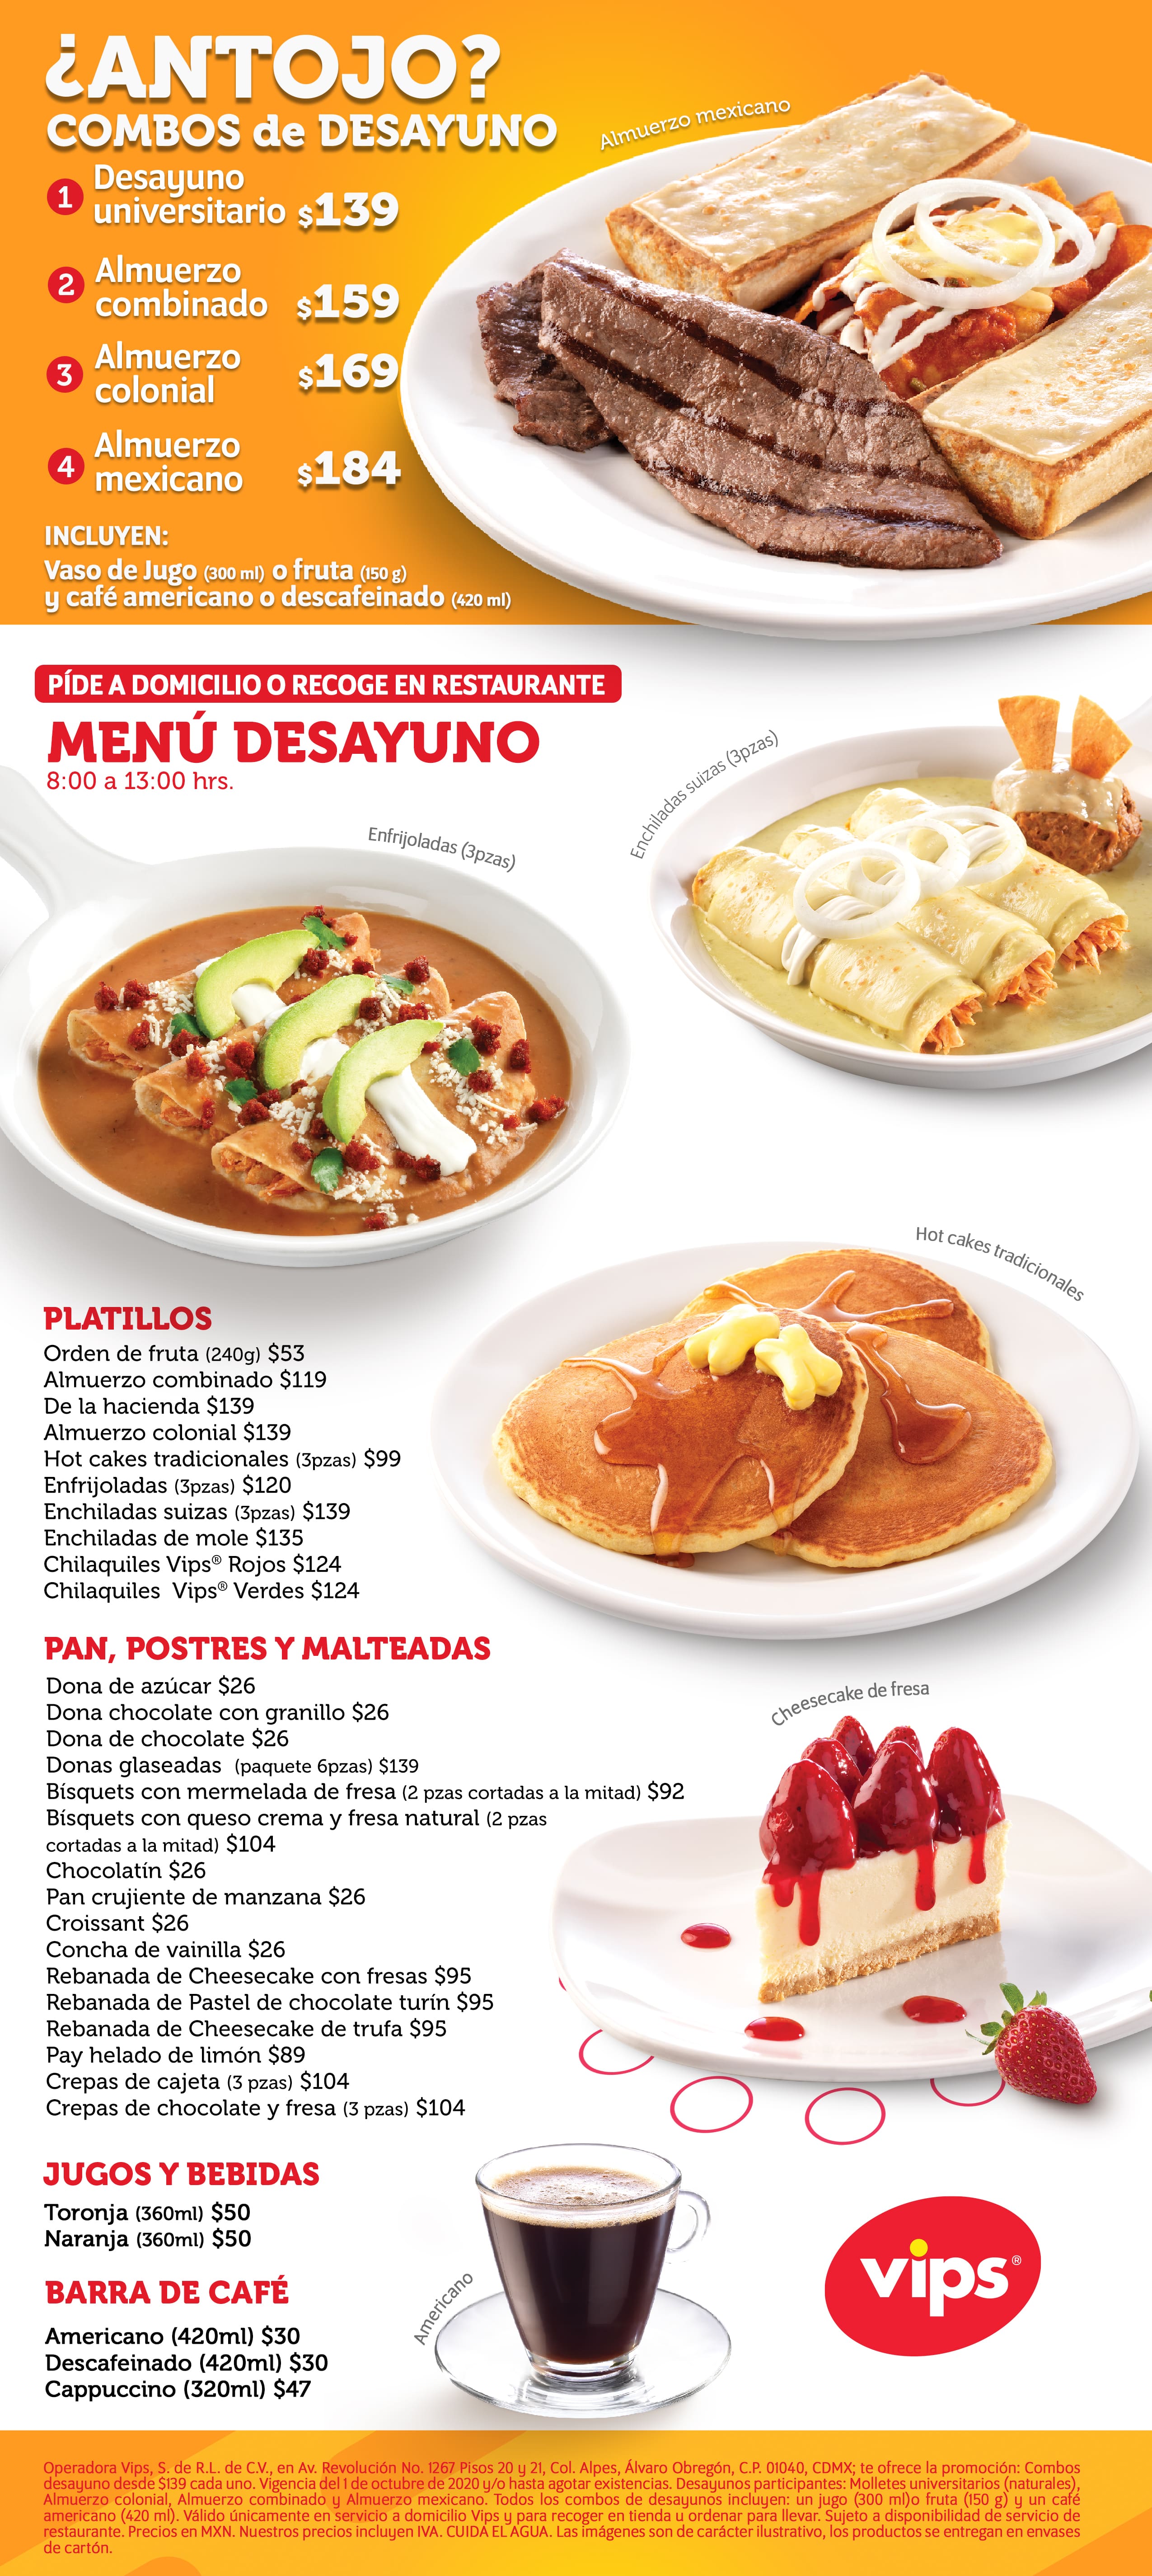 Total 114+ imagen desayunos vips menu